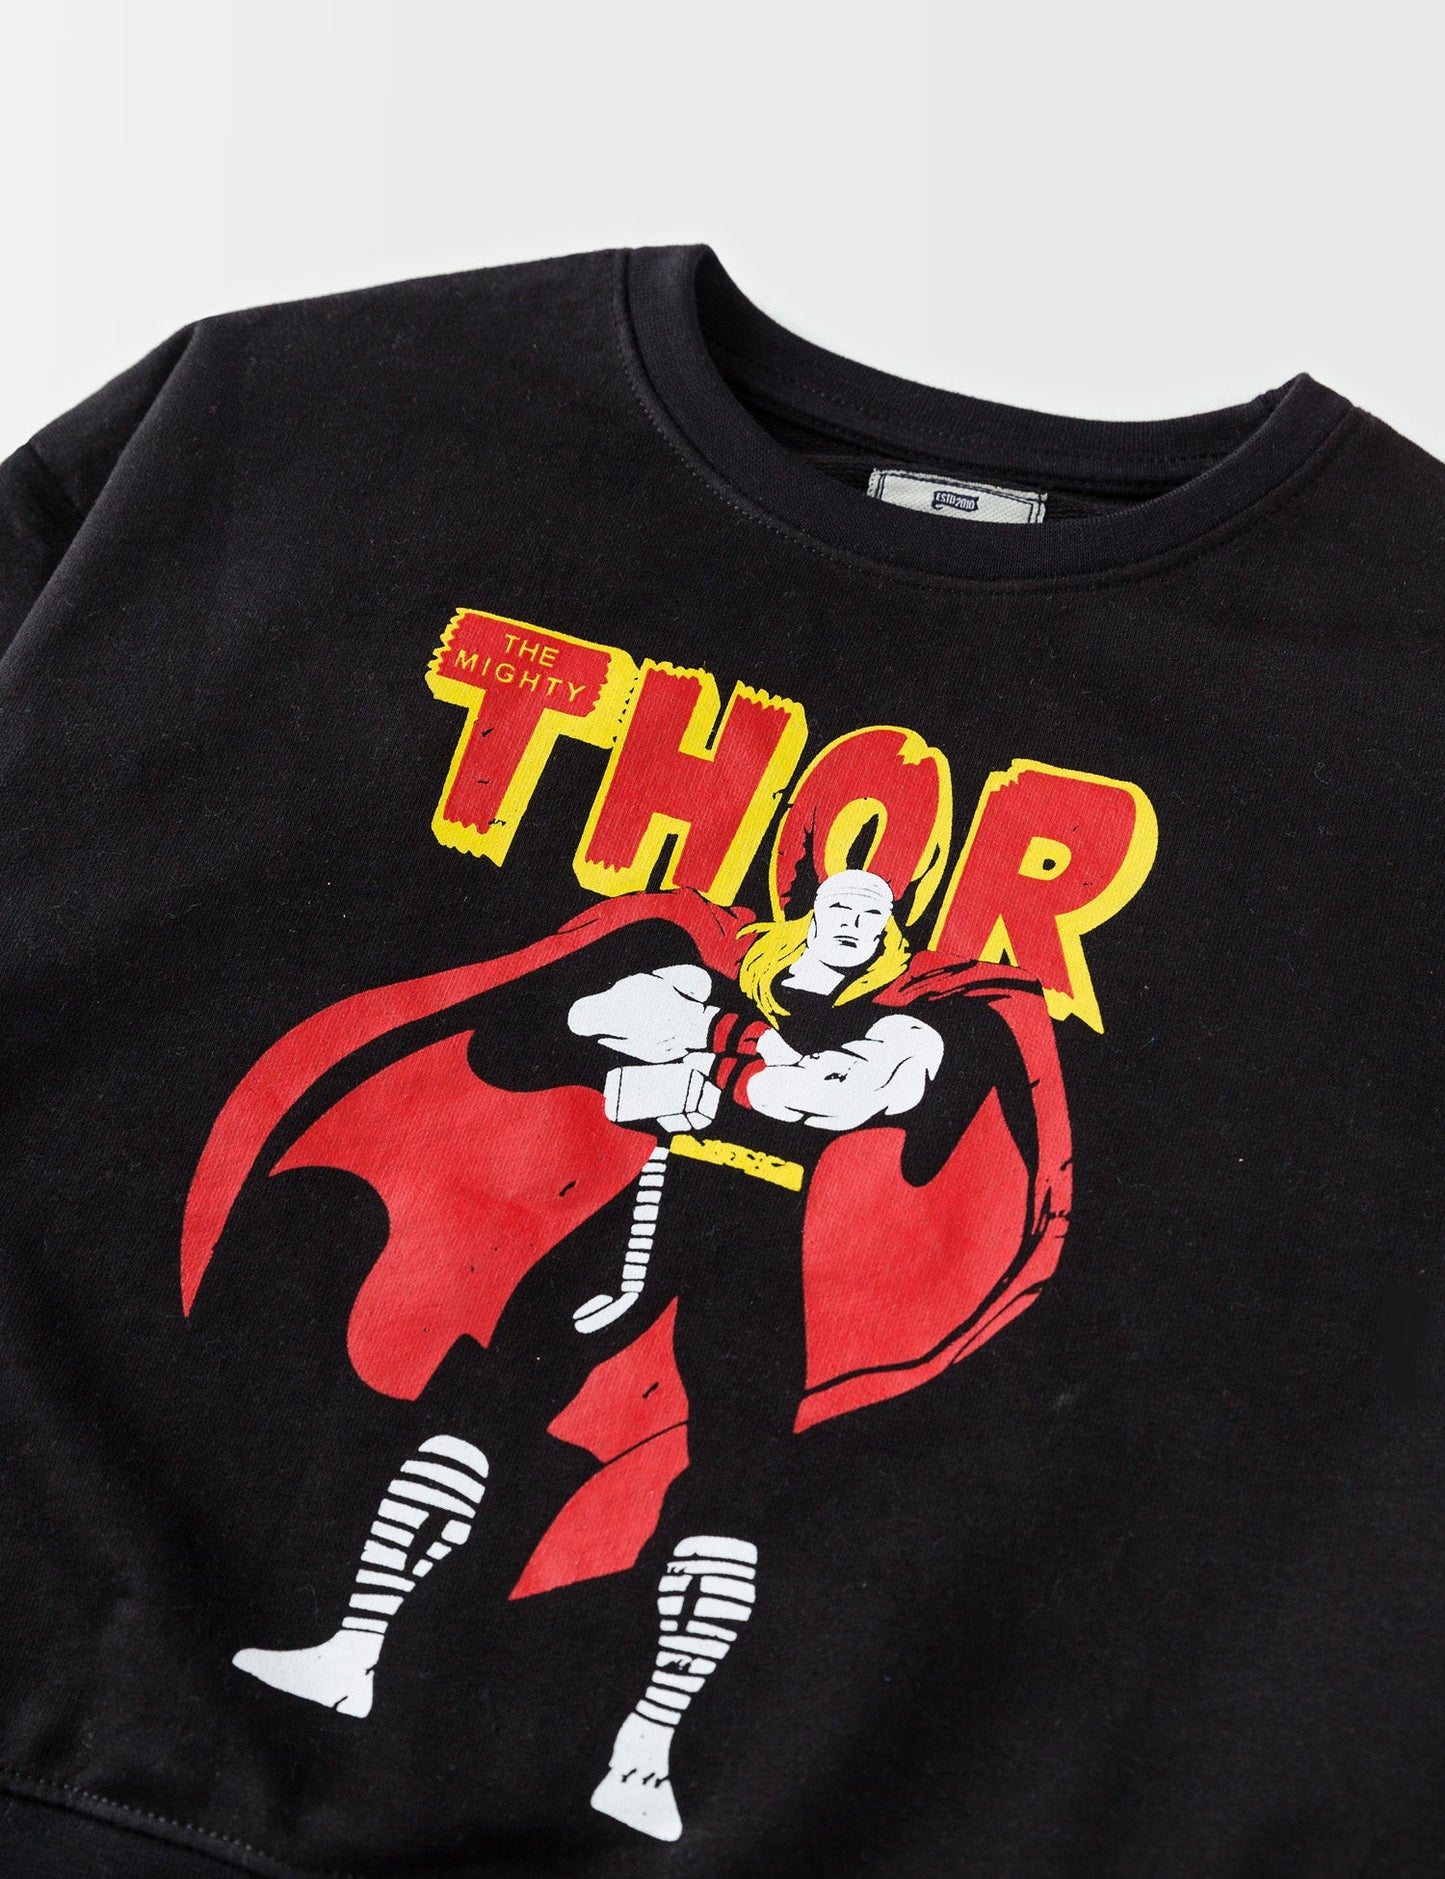 Thor Graphic Sweatshirt